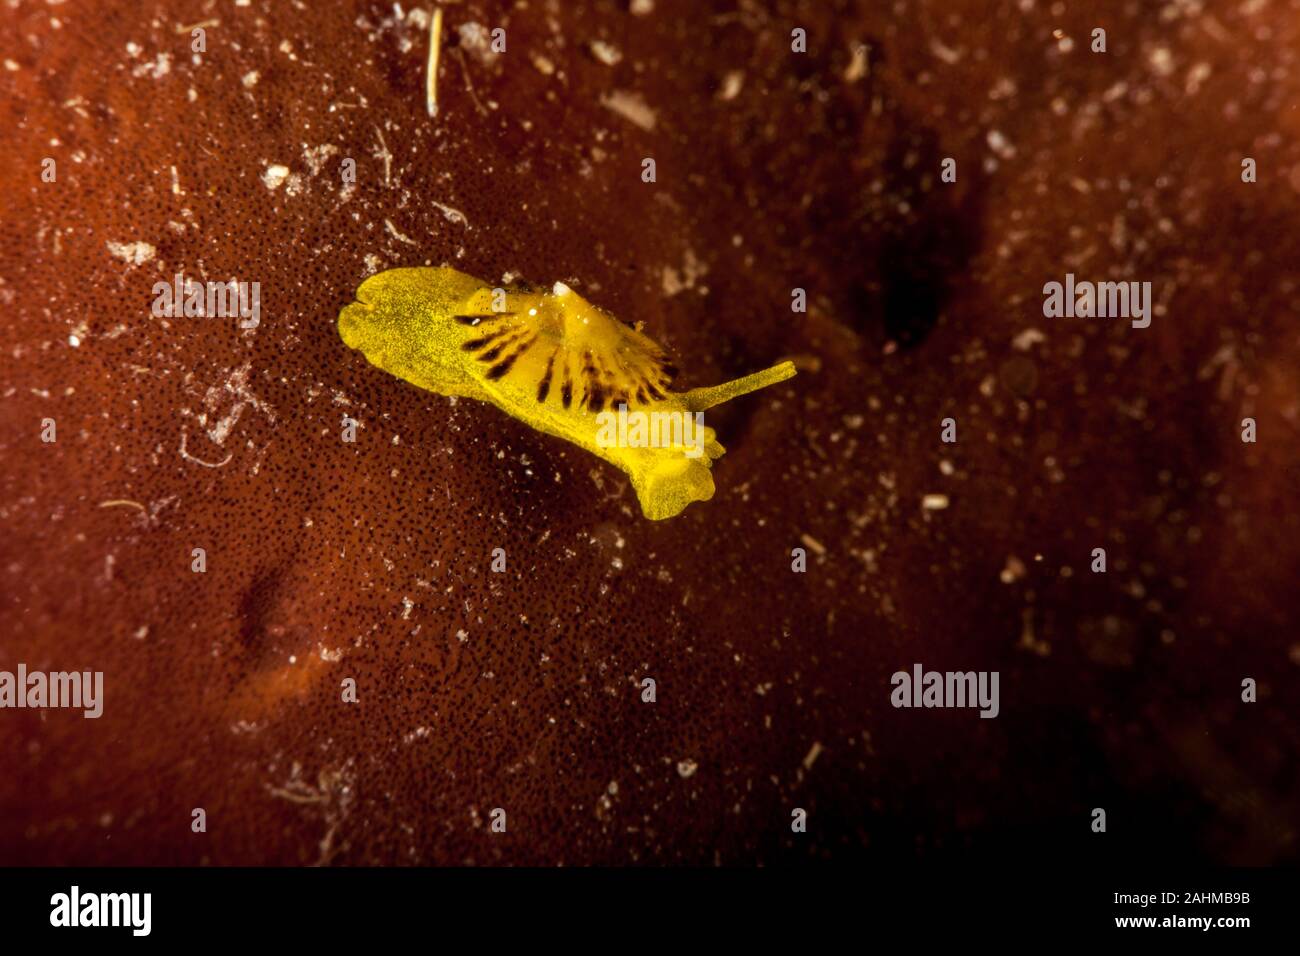 yellow umbrella slug, yellow tylodina, is a species of sea snail Tylodina perversa Stock Photo